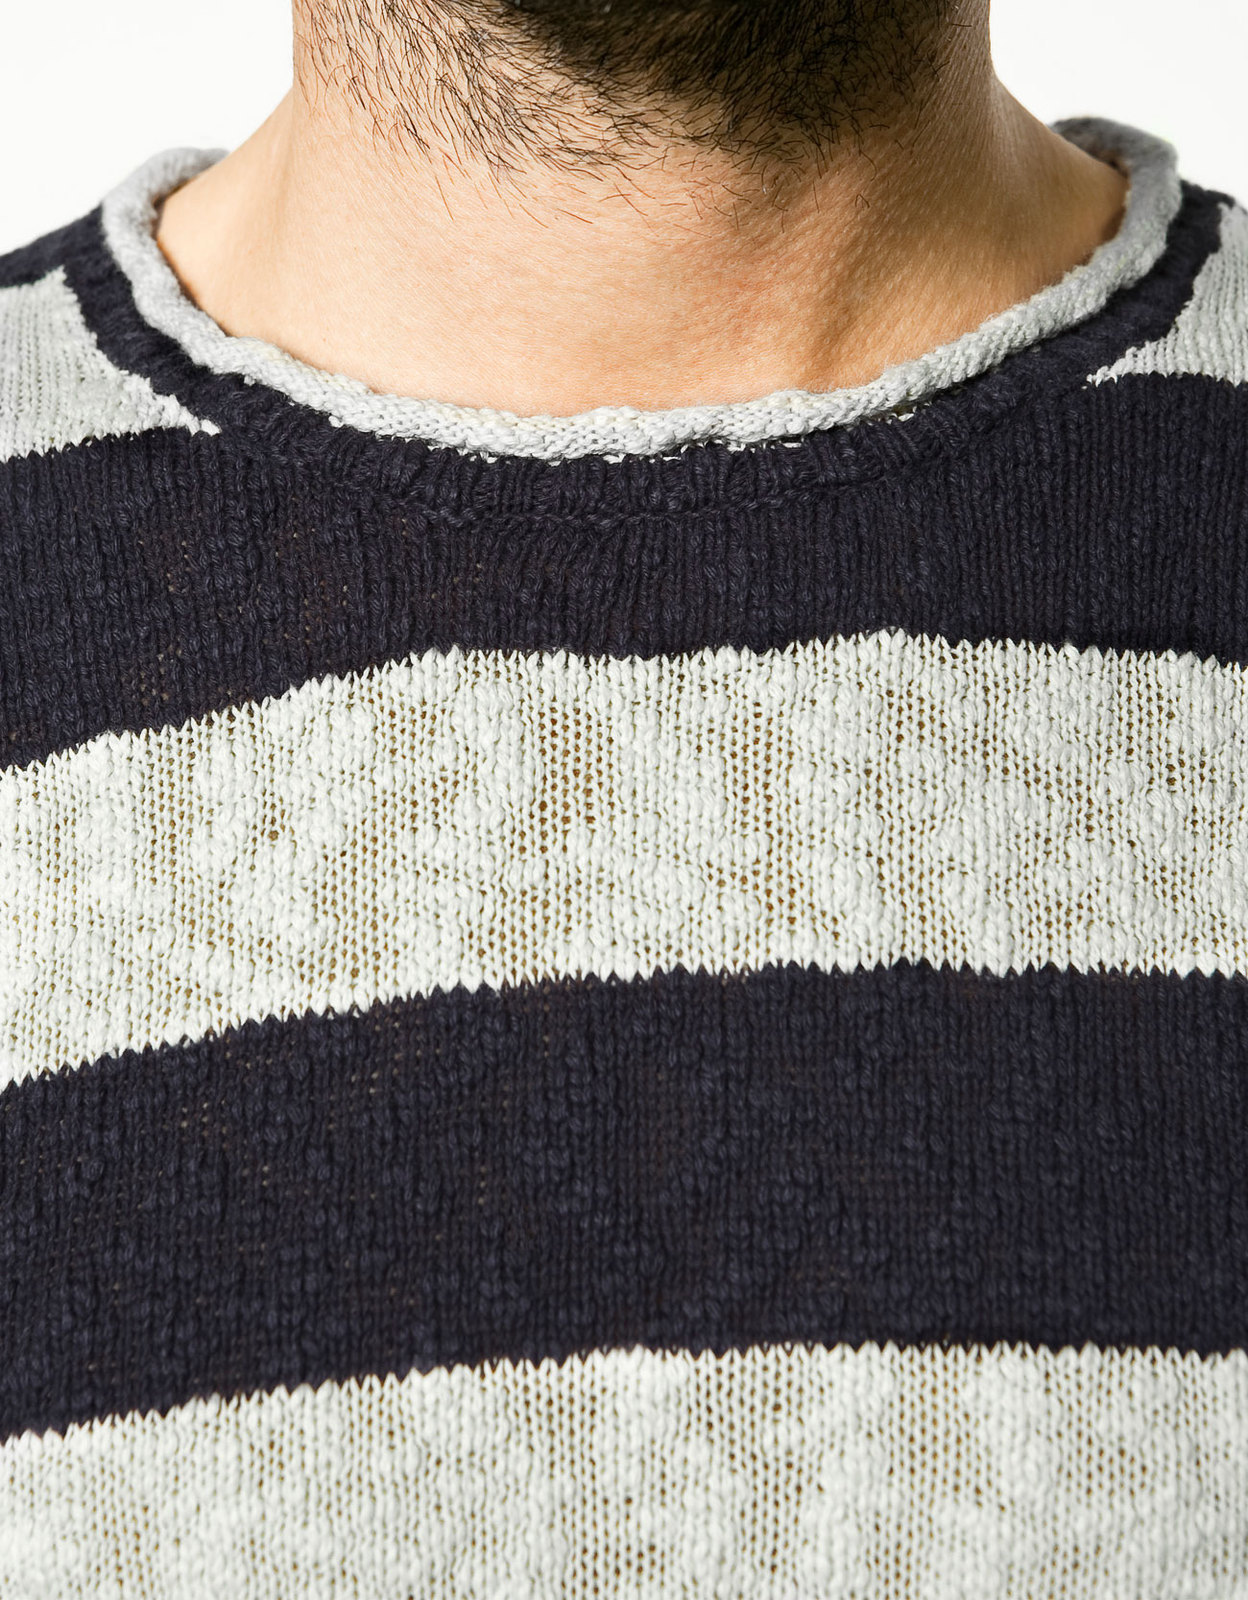 Zara csíkos pulóver 2012.2.10 fotója